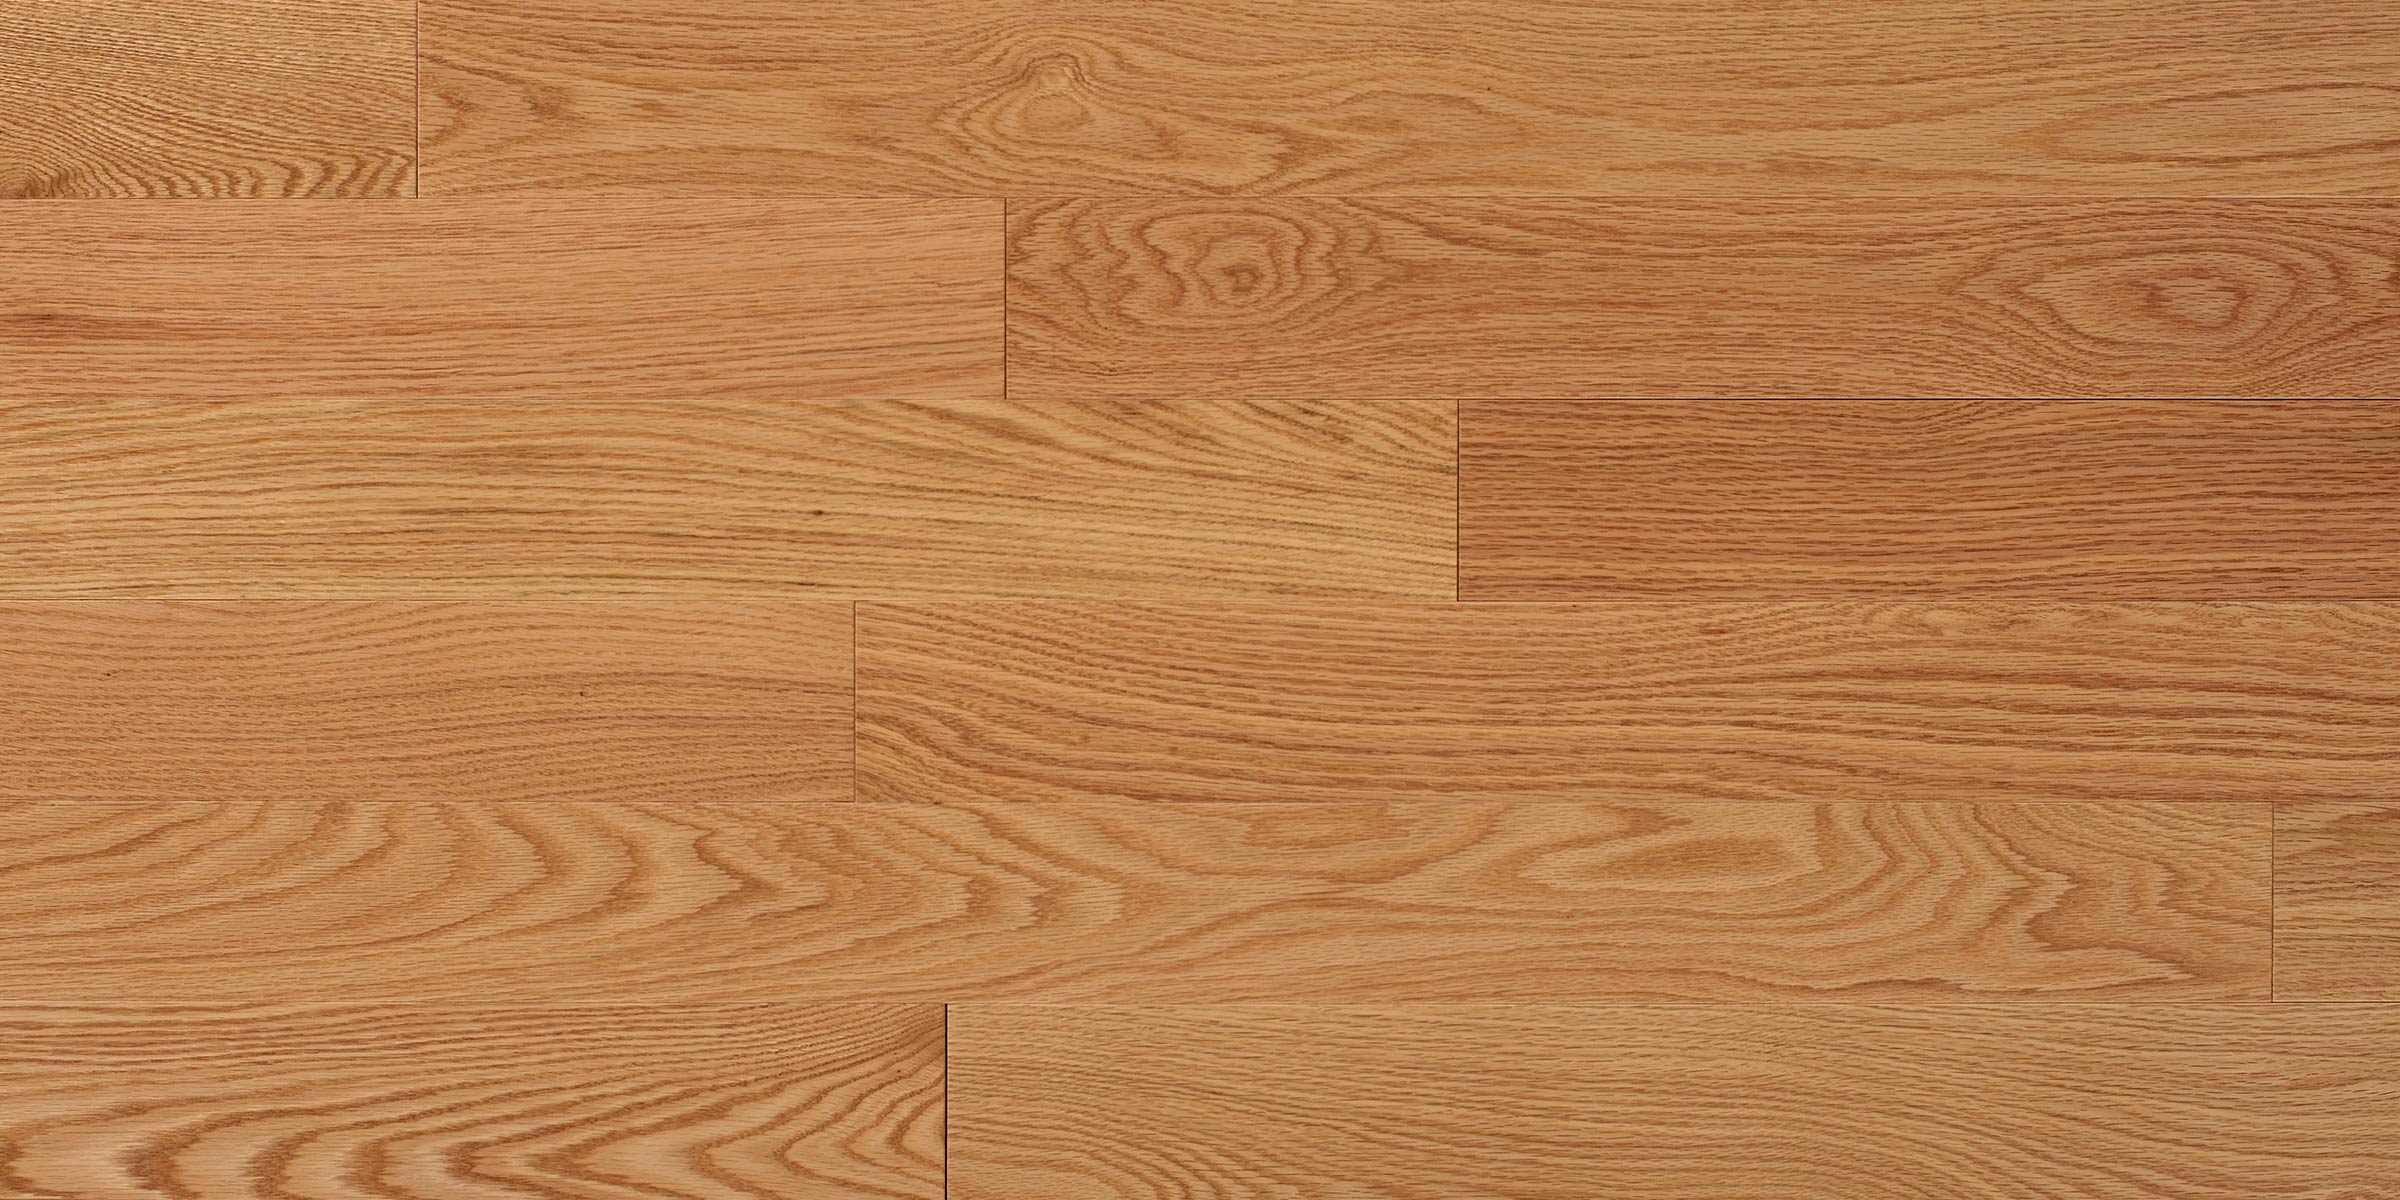 Appalachian Flooring A Tradition Of, Red Oak Natural Finish Hardwood Flooring